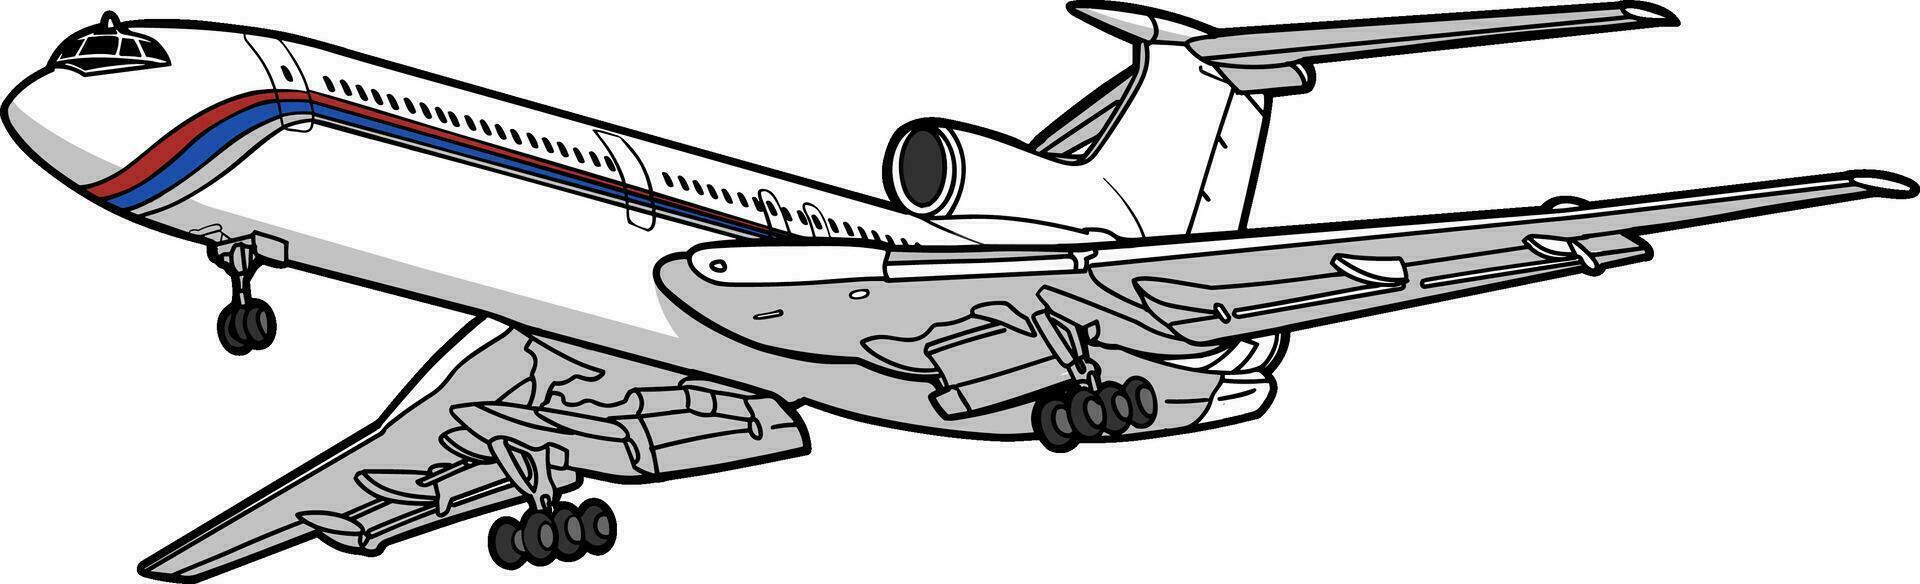 airplane flying sky transportation illustration vector